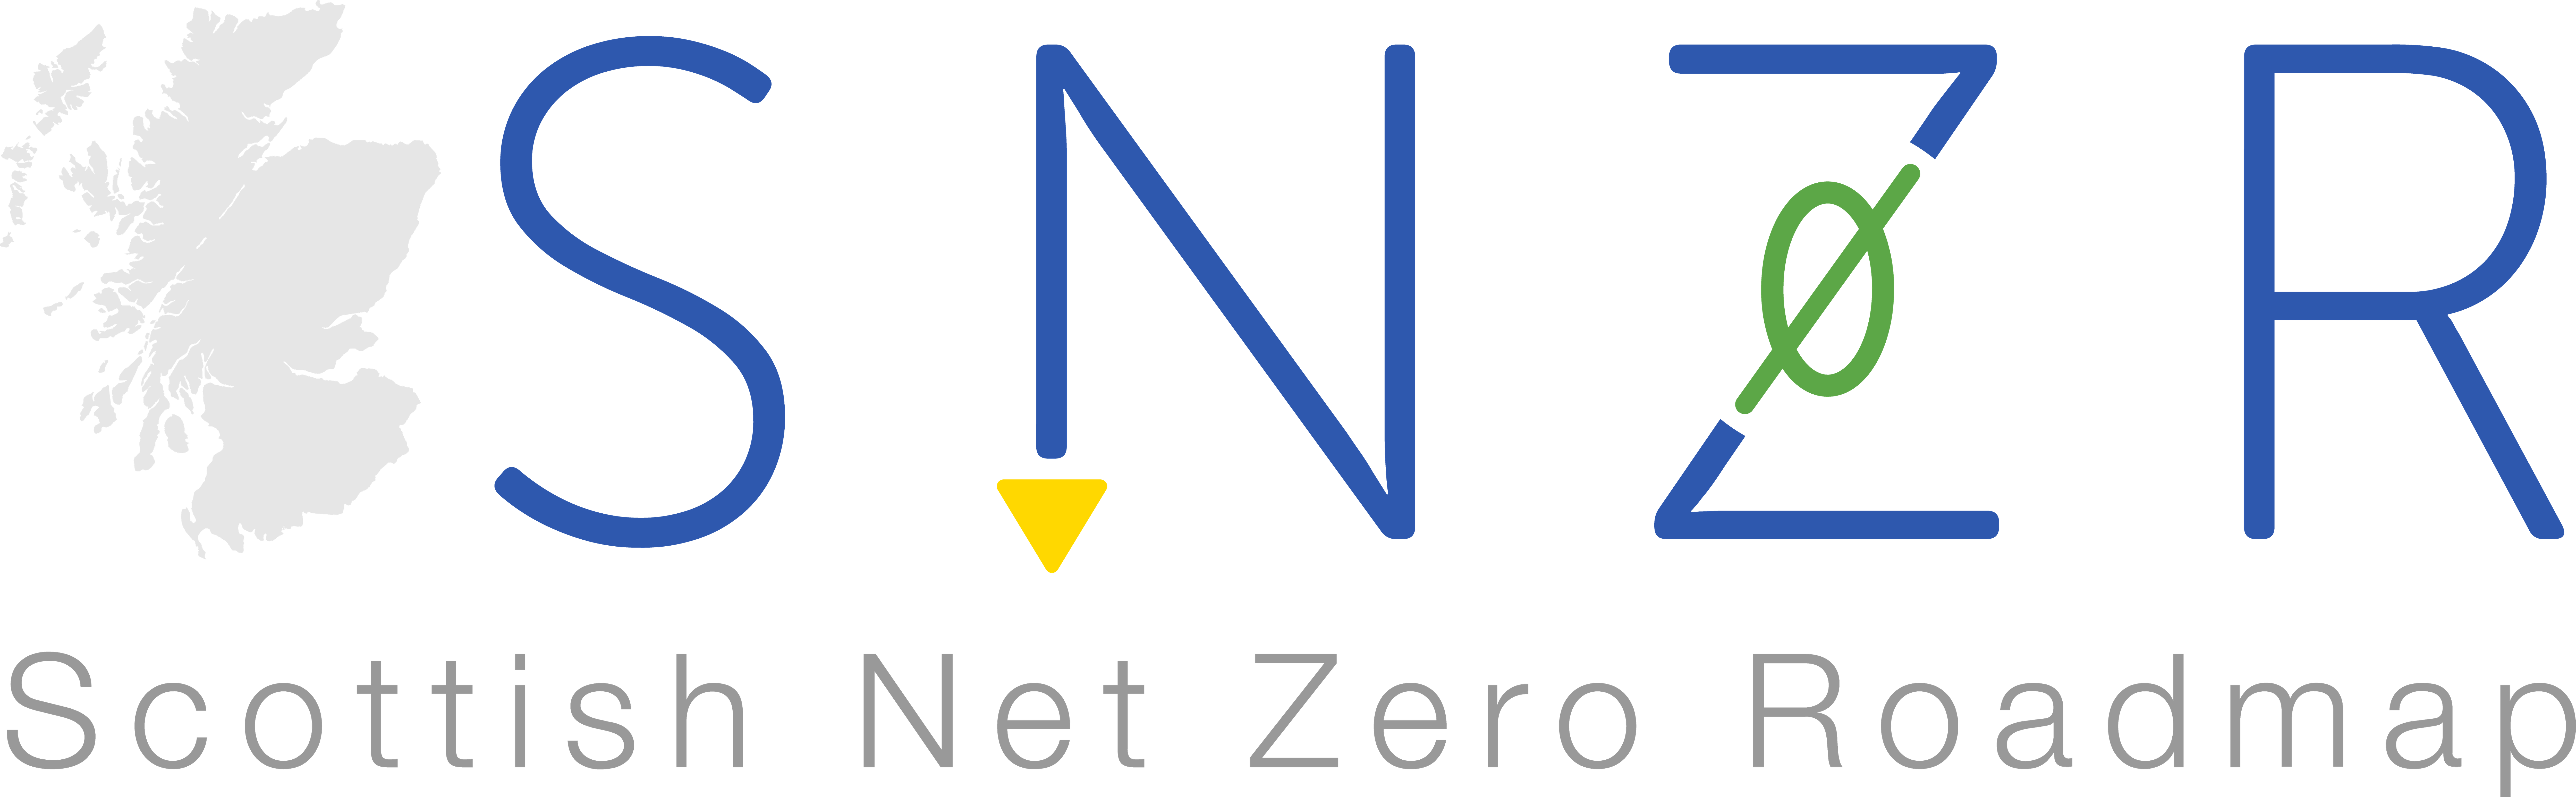 Scottish Net Zero Roadmap logo logo